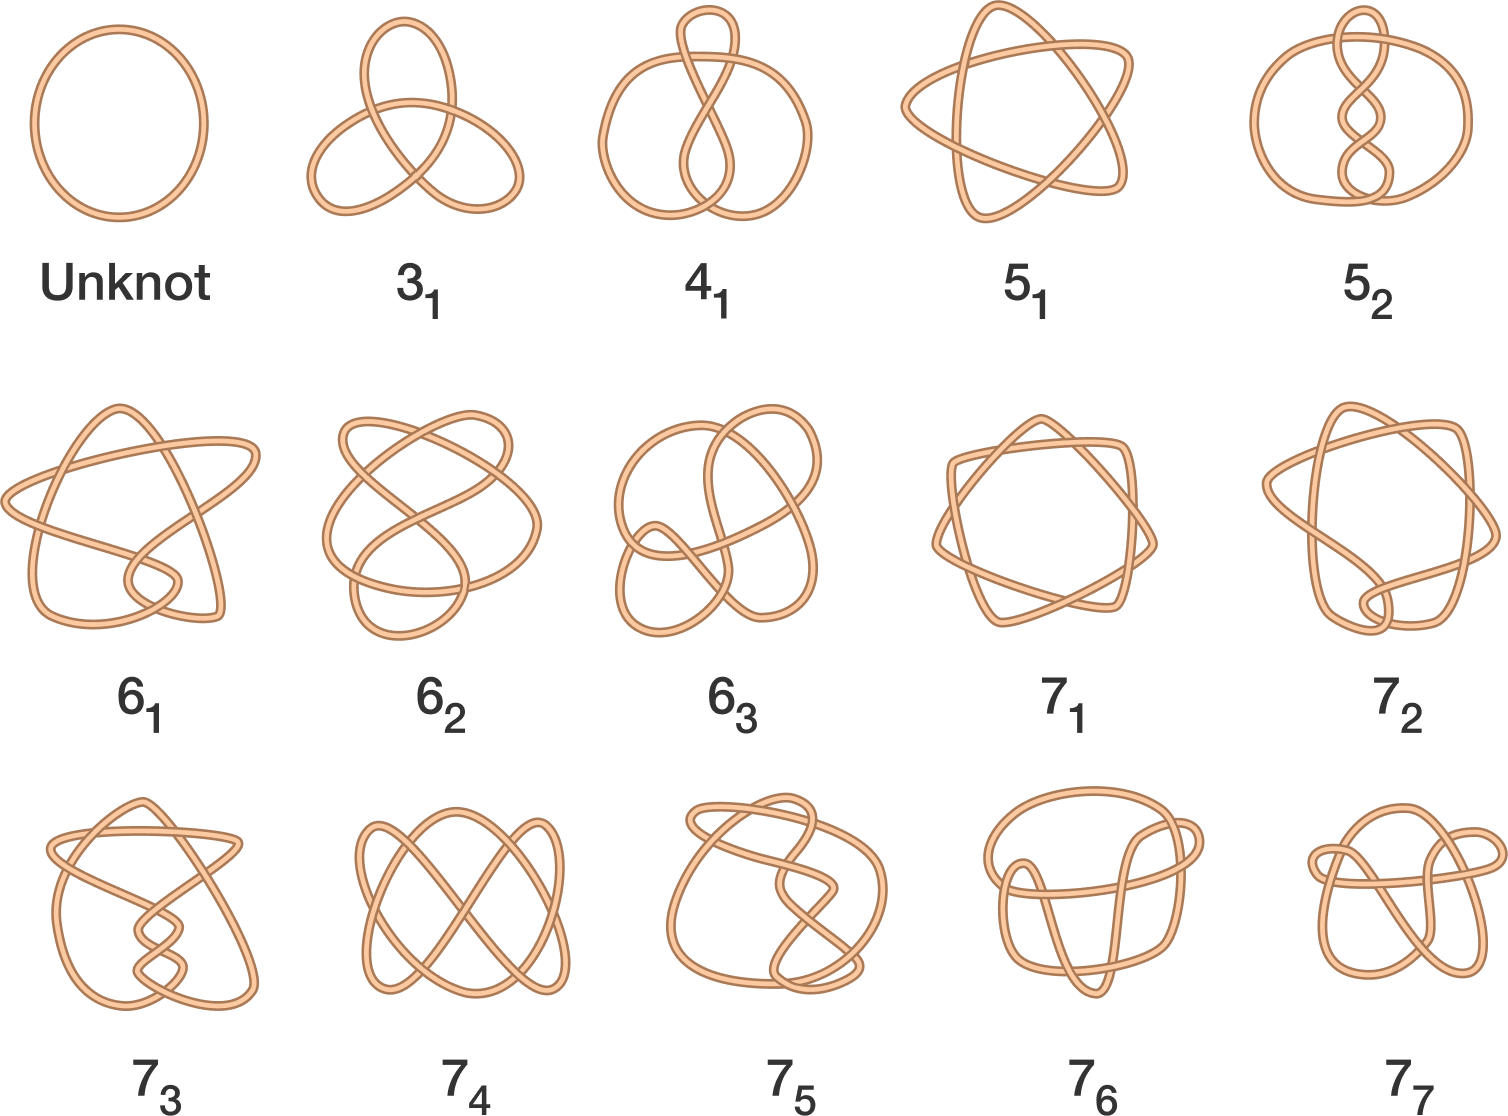 Figure 3: Knots